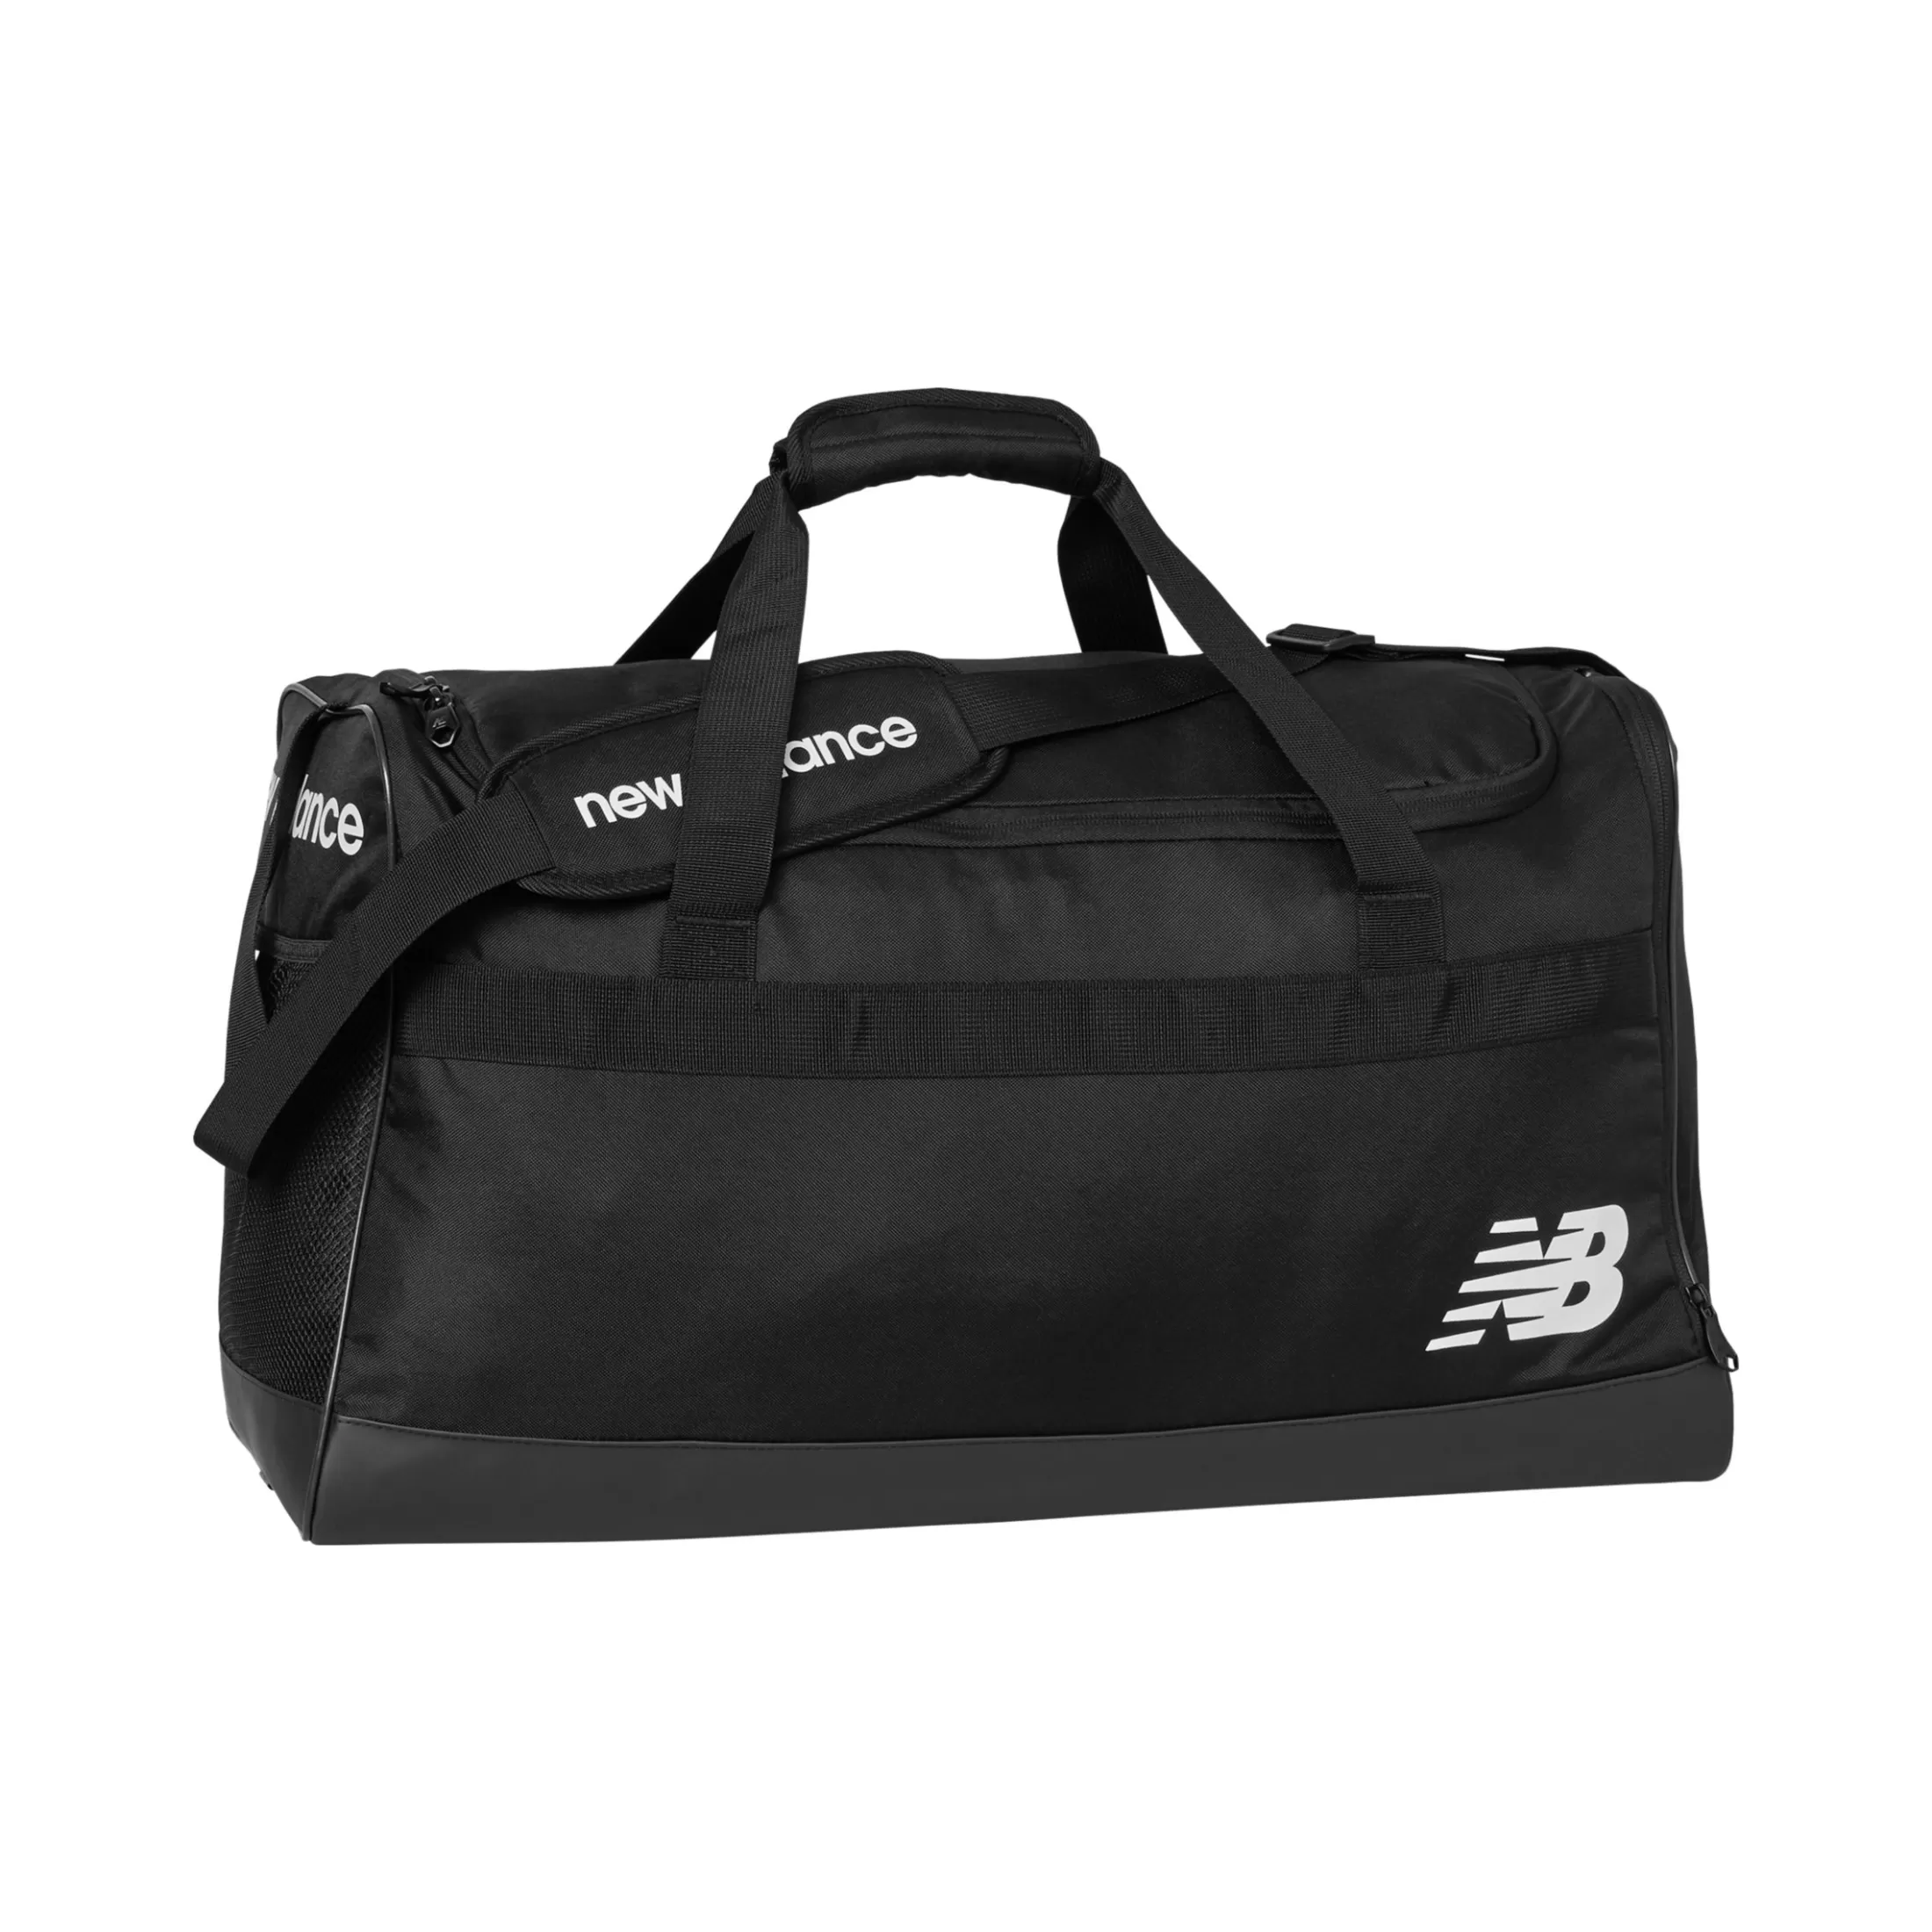 Fashion Unisex Team Duffel Bag Medium MULHER/HOMEN Bags & Backpacks | All Accessories